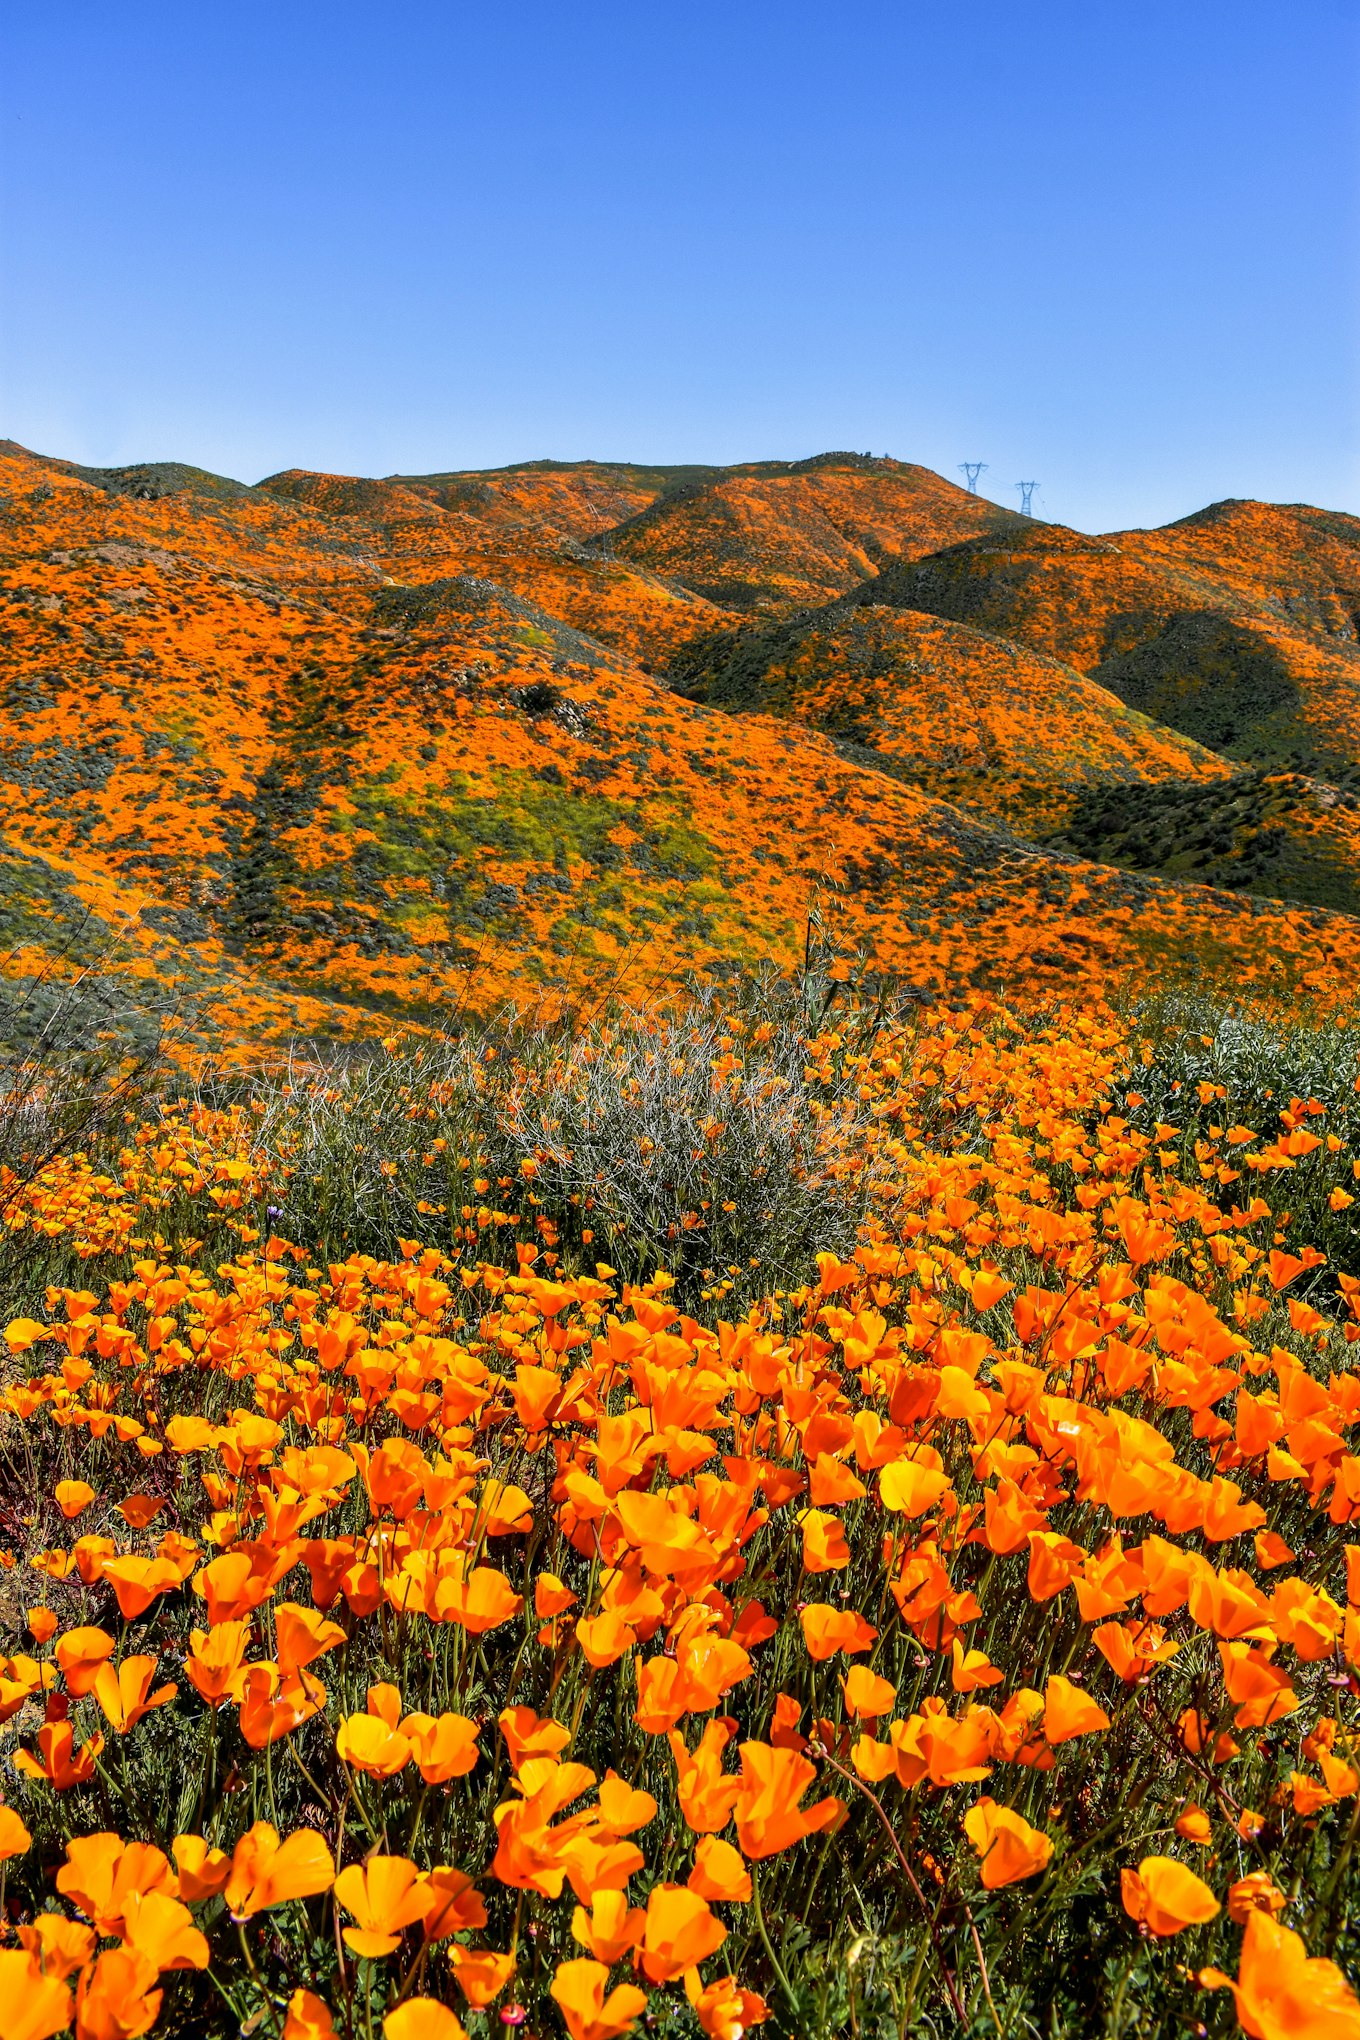 Historic superbloom brings vibrant colors to California's desert - ABC News